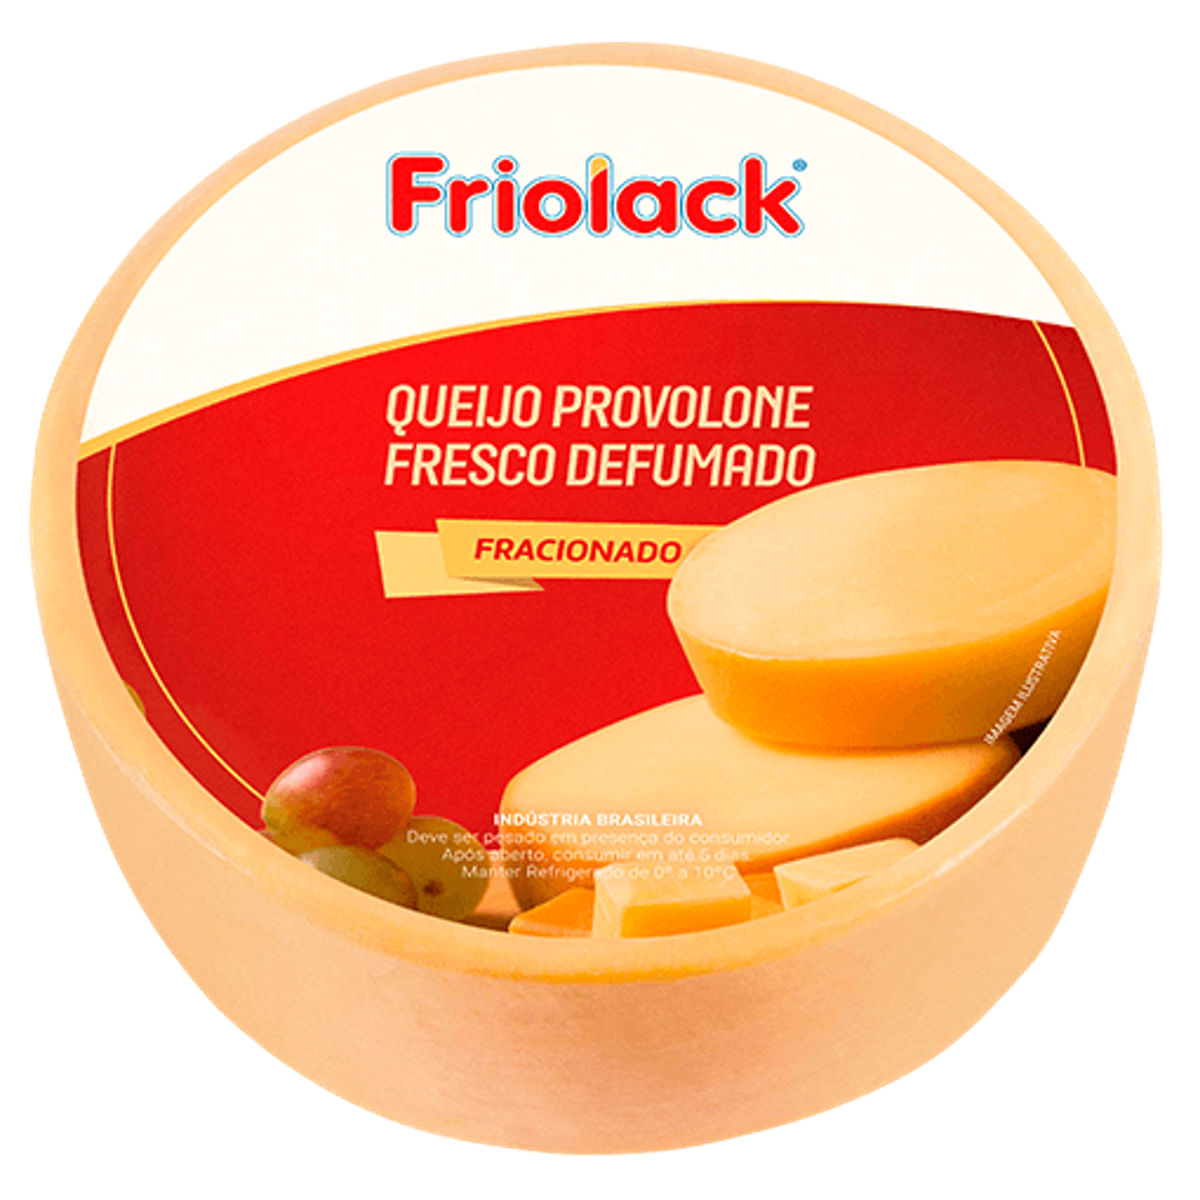 qjo-provolone-fresco-def-frac-friolac-kg-1.jpg